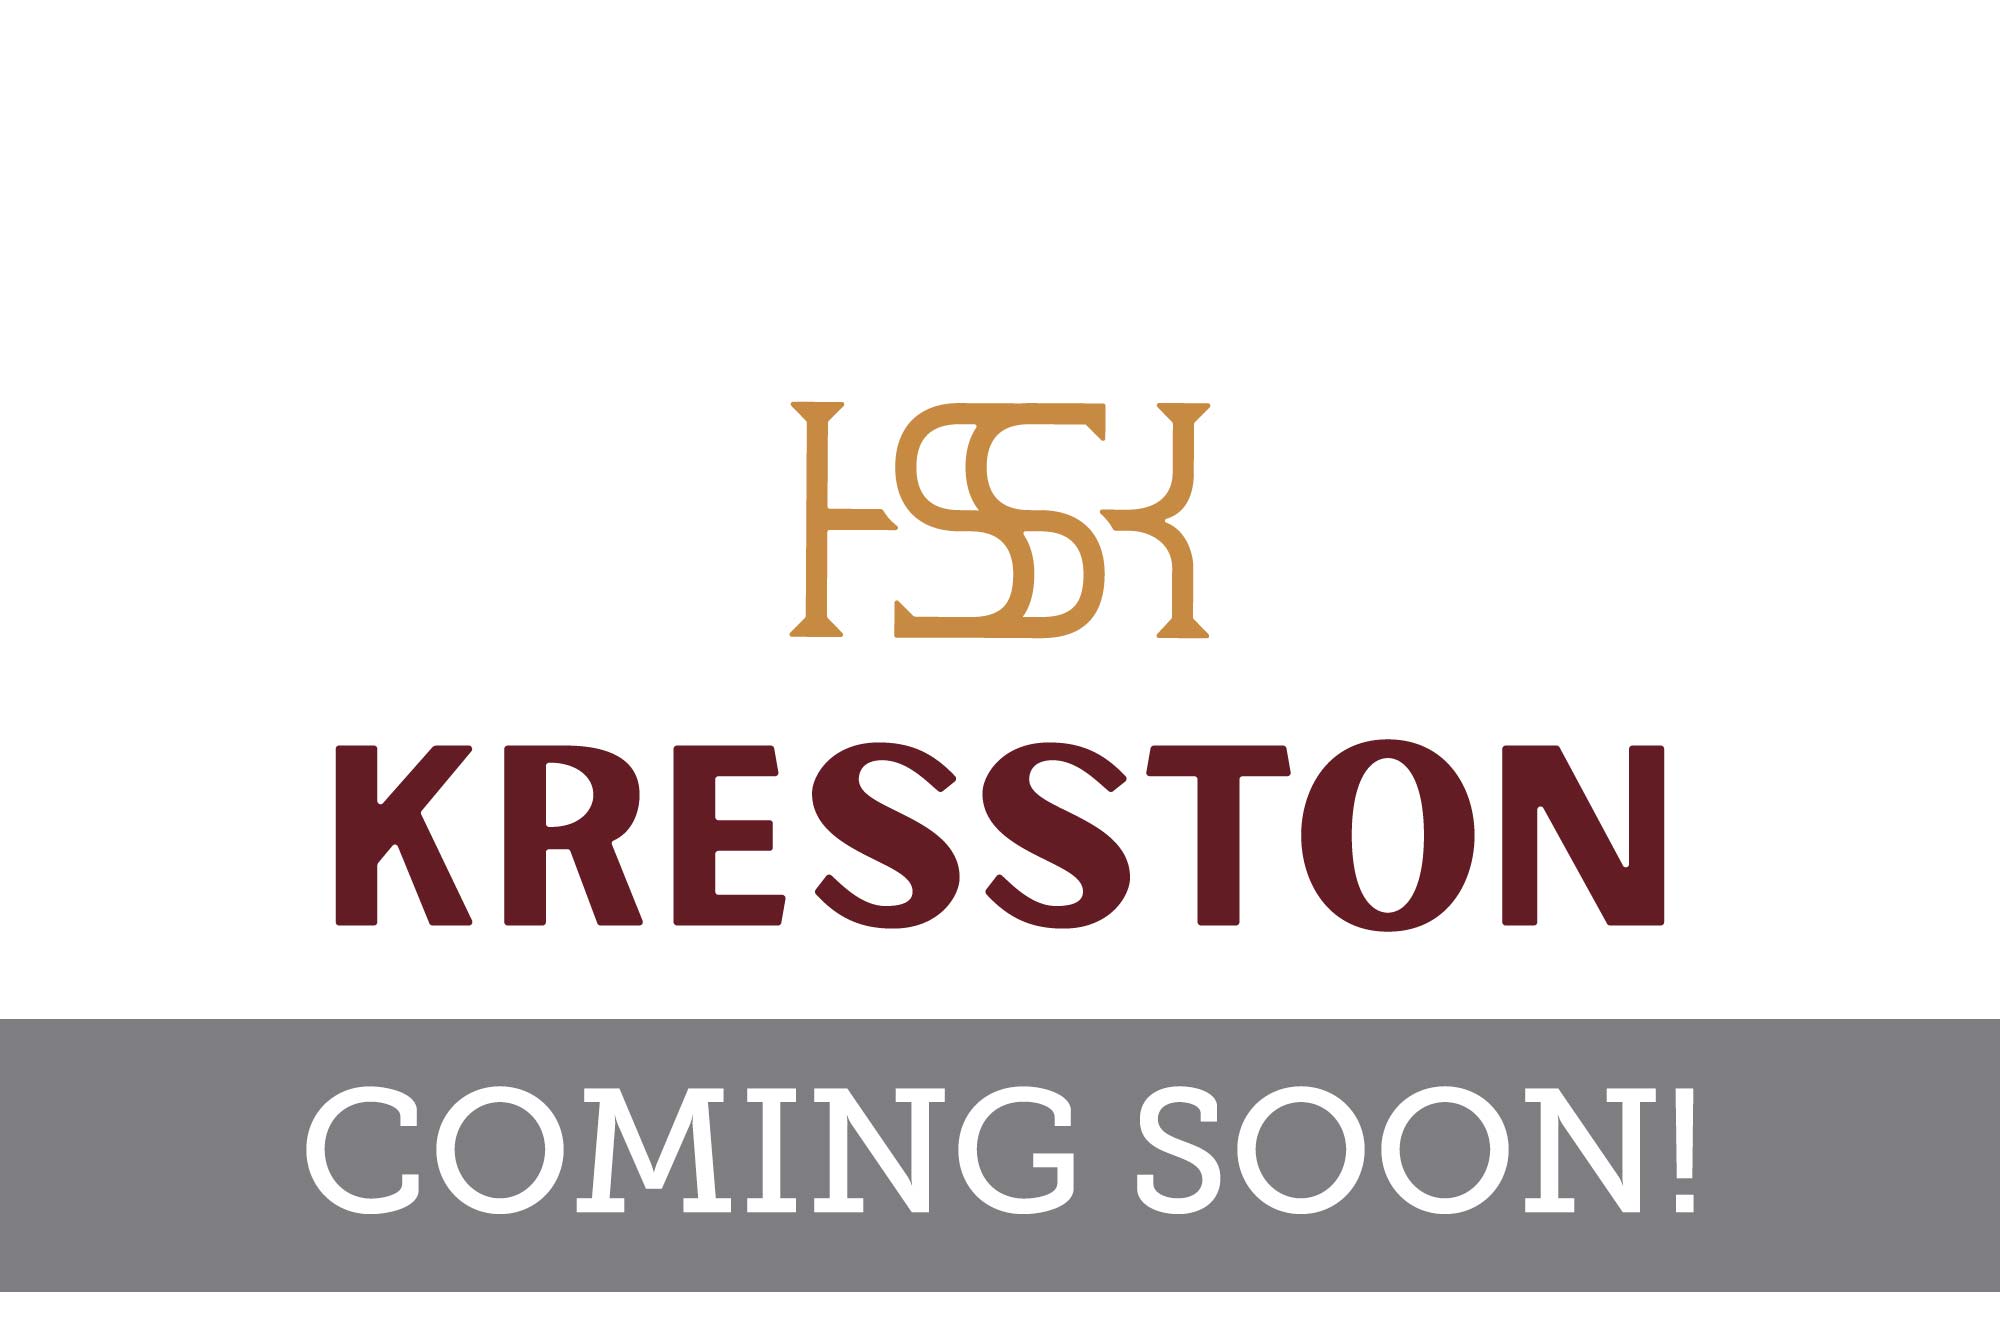 Kresston - Coming Soon